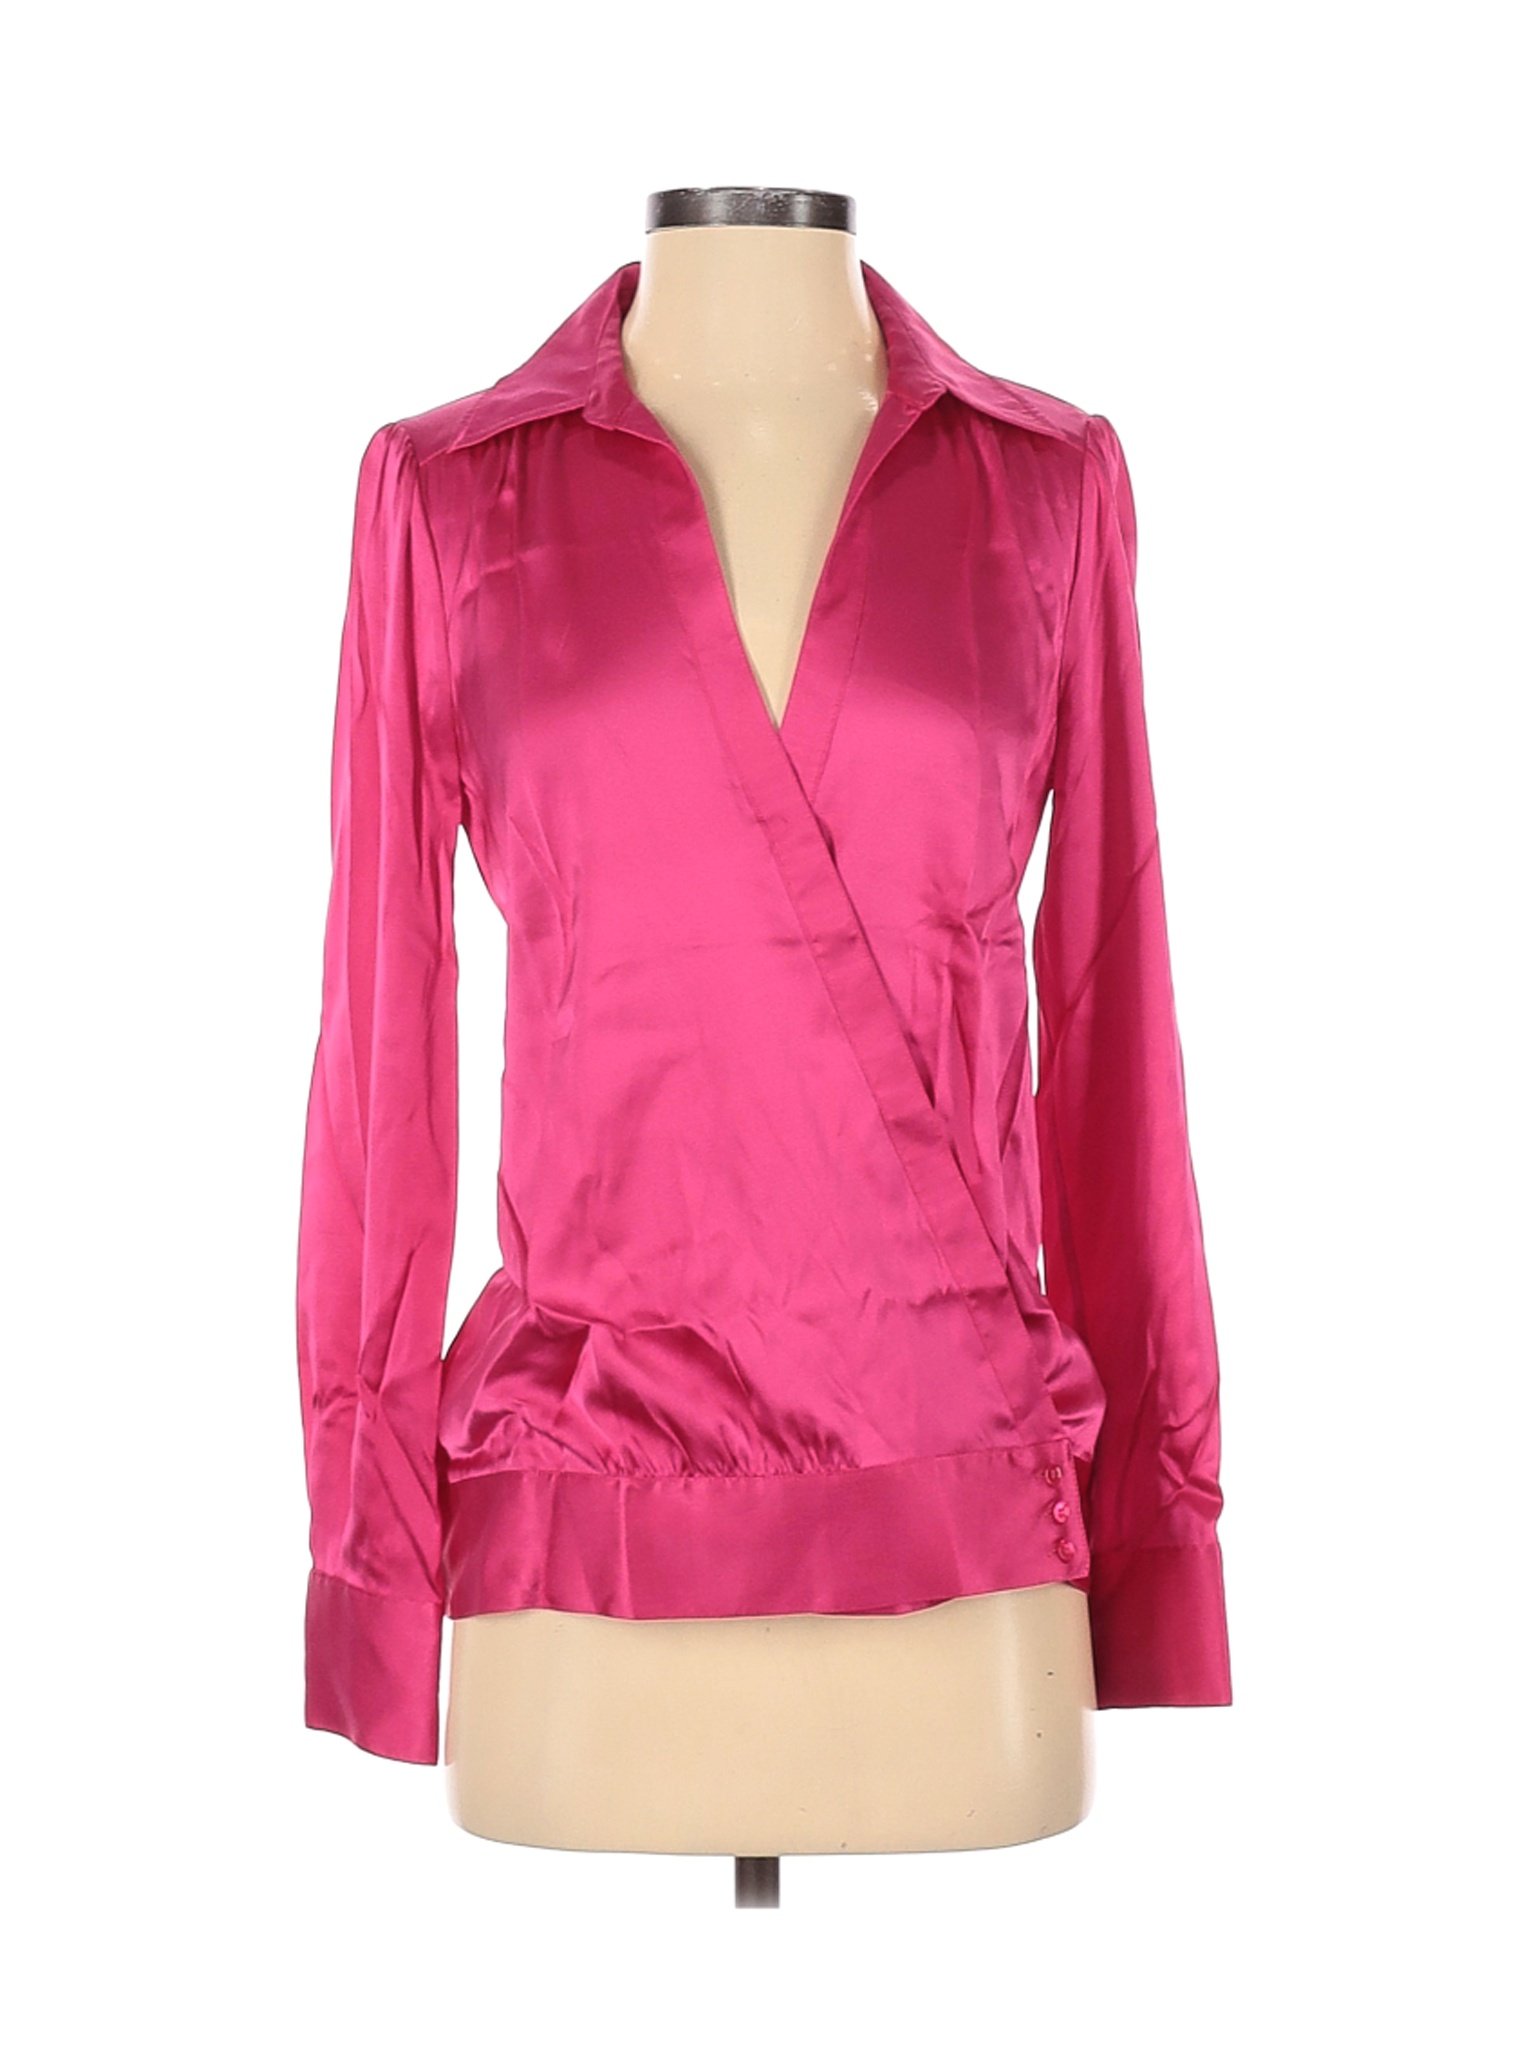 BCBGMAXAZRIA Women Pink Long Sleeve Silk Top S | eBay